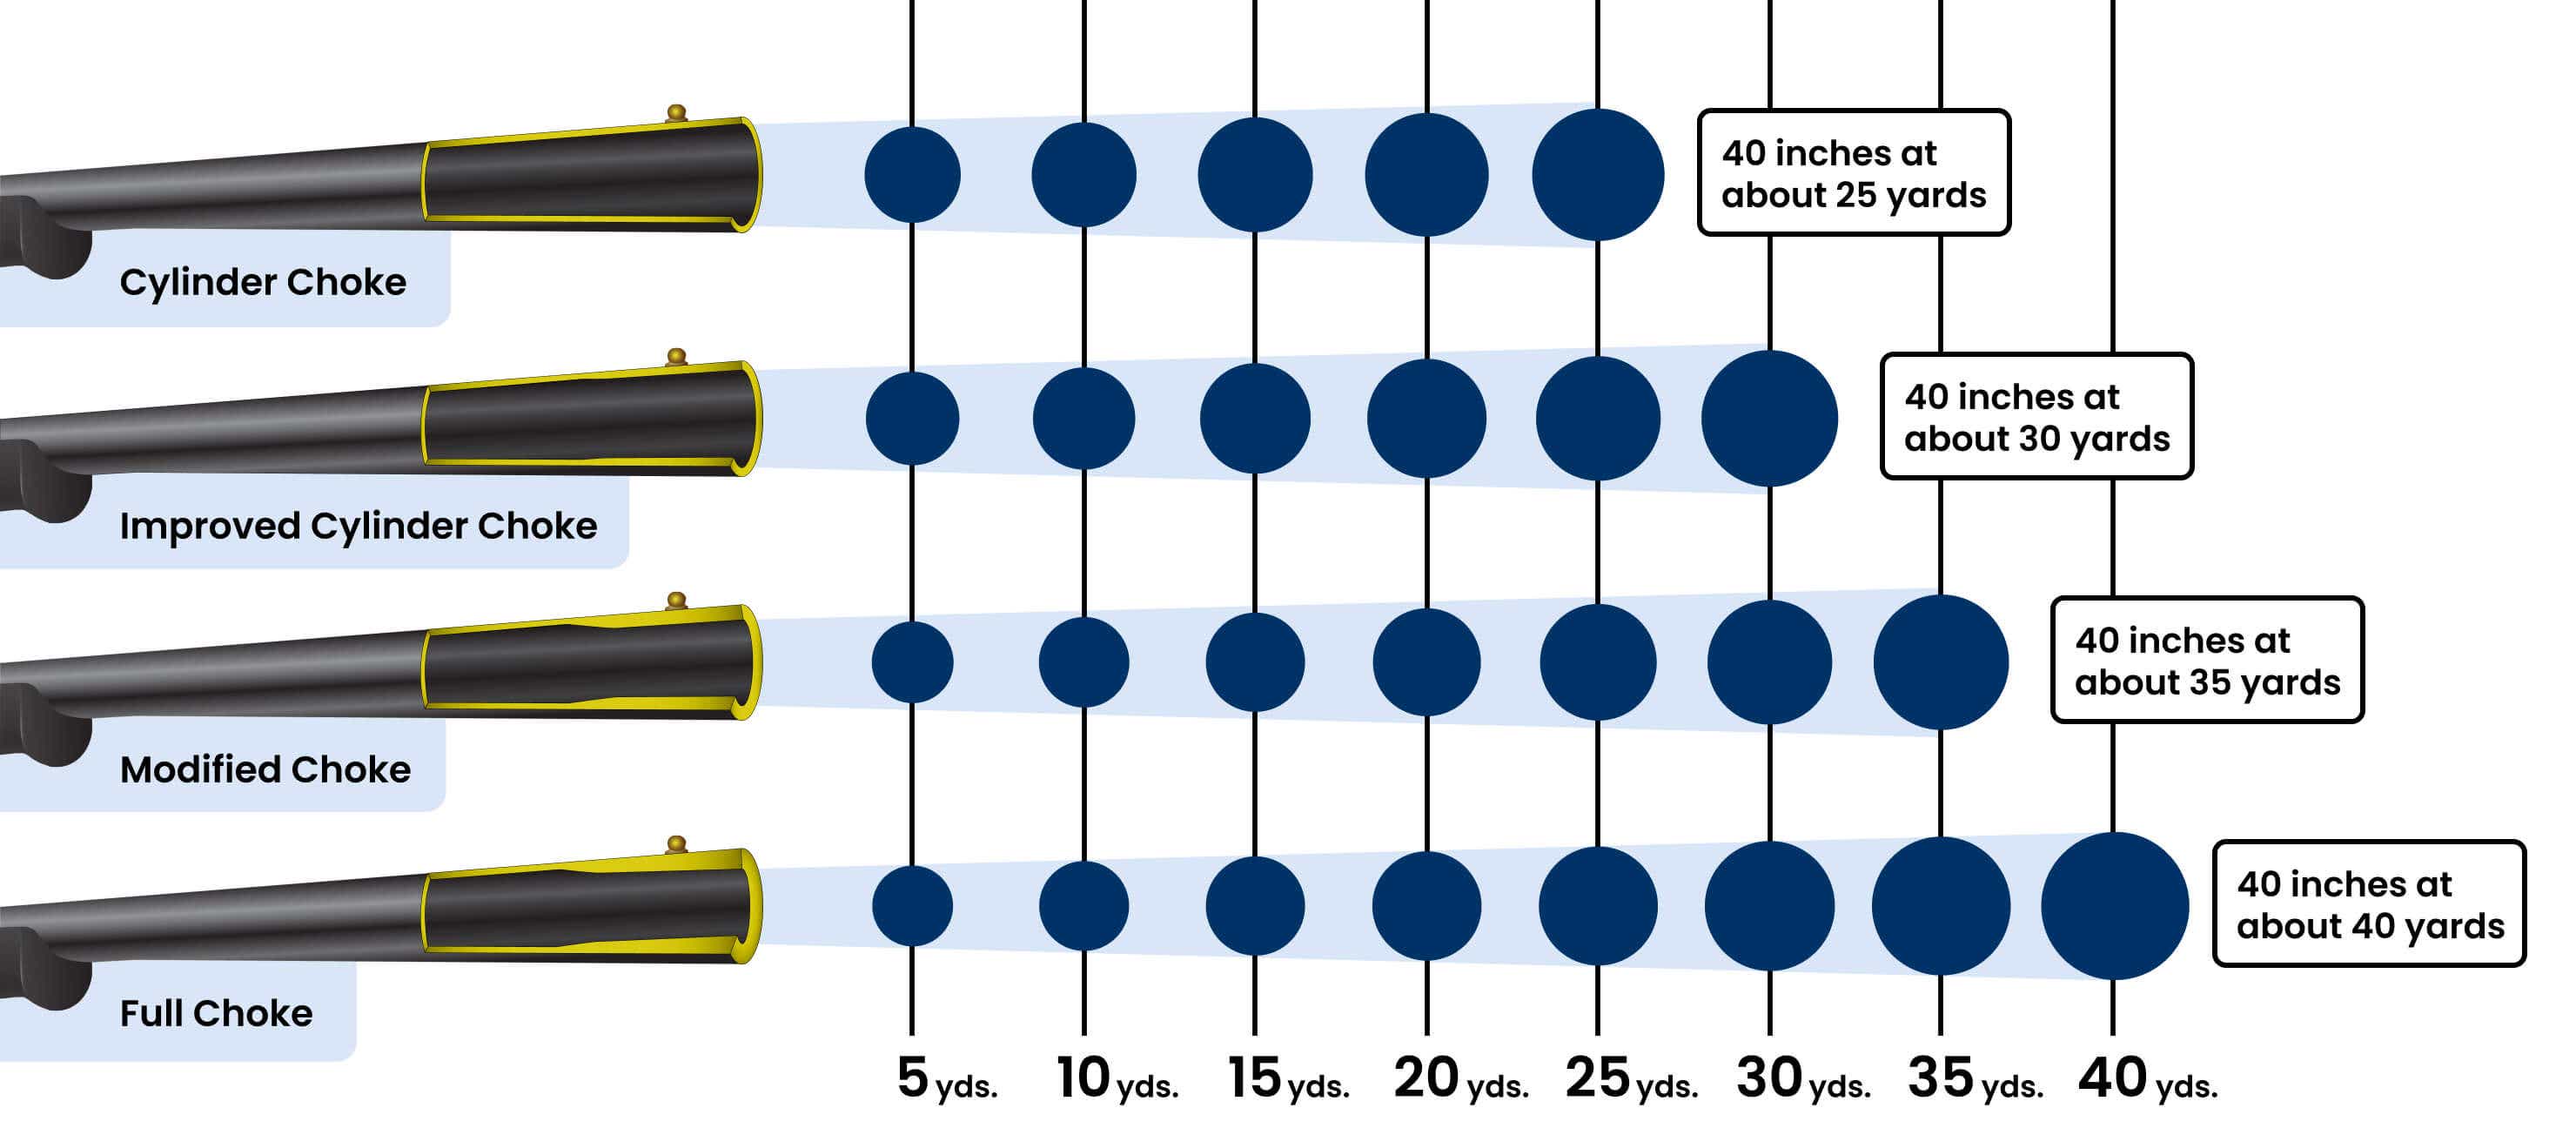 shotgun choke chart depicting spread sizes for different types of shotgun choke tubes